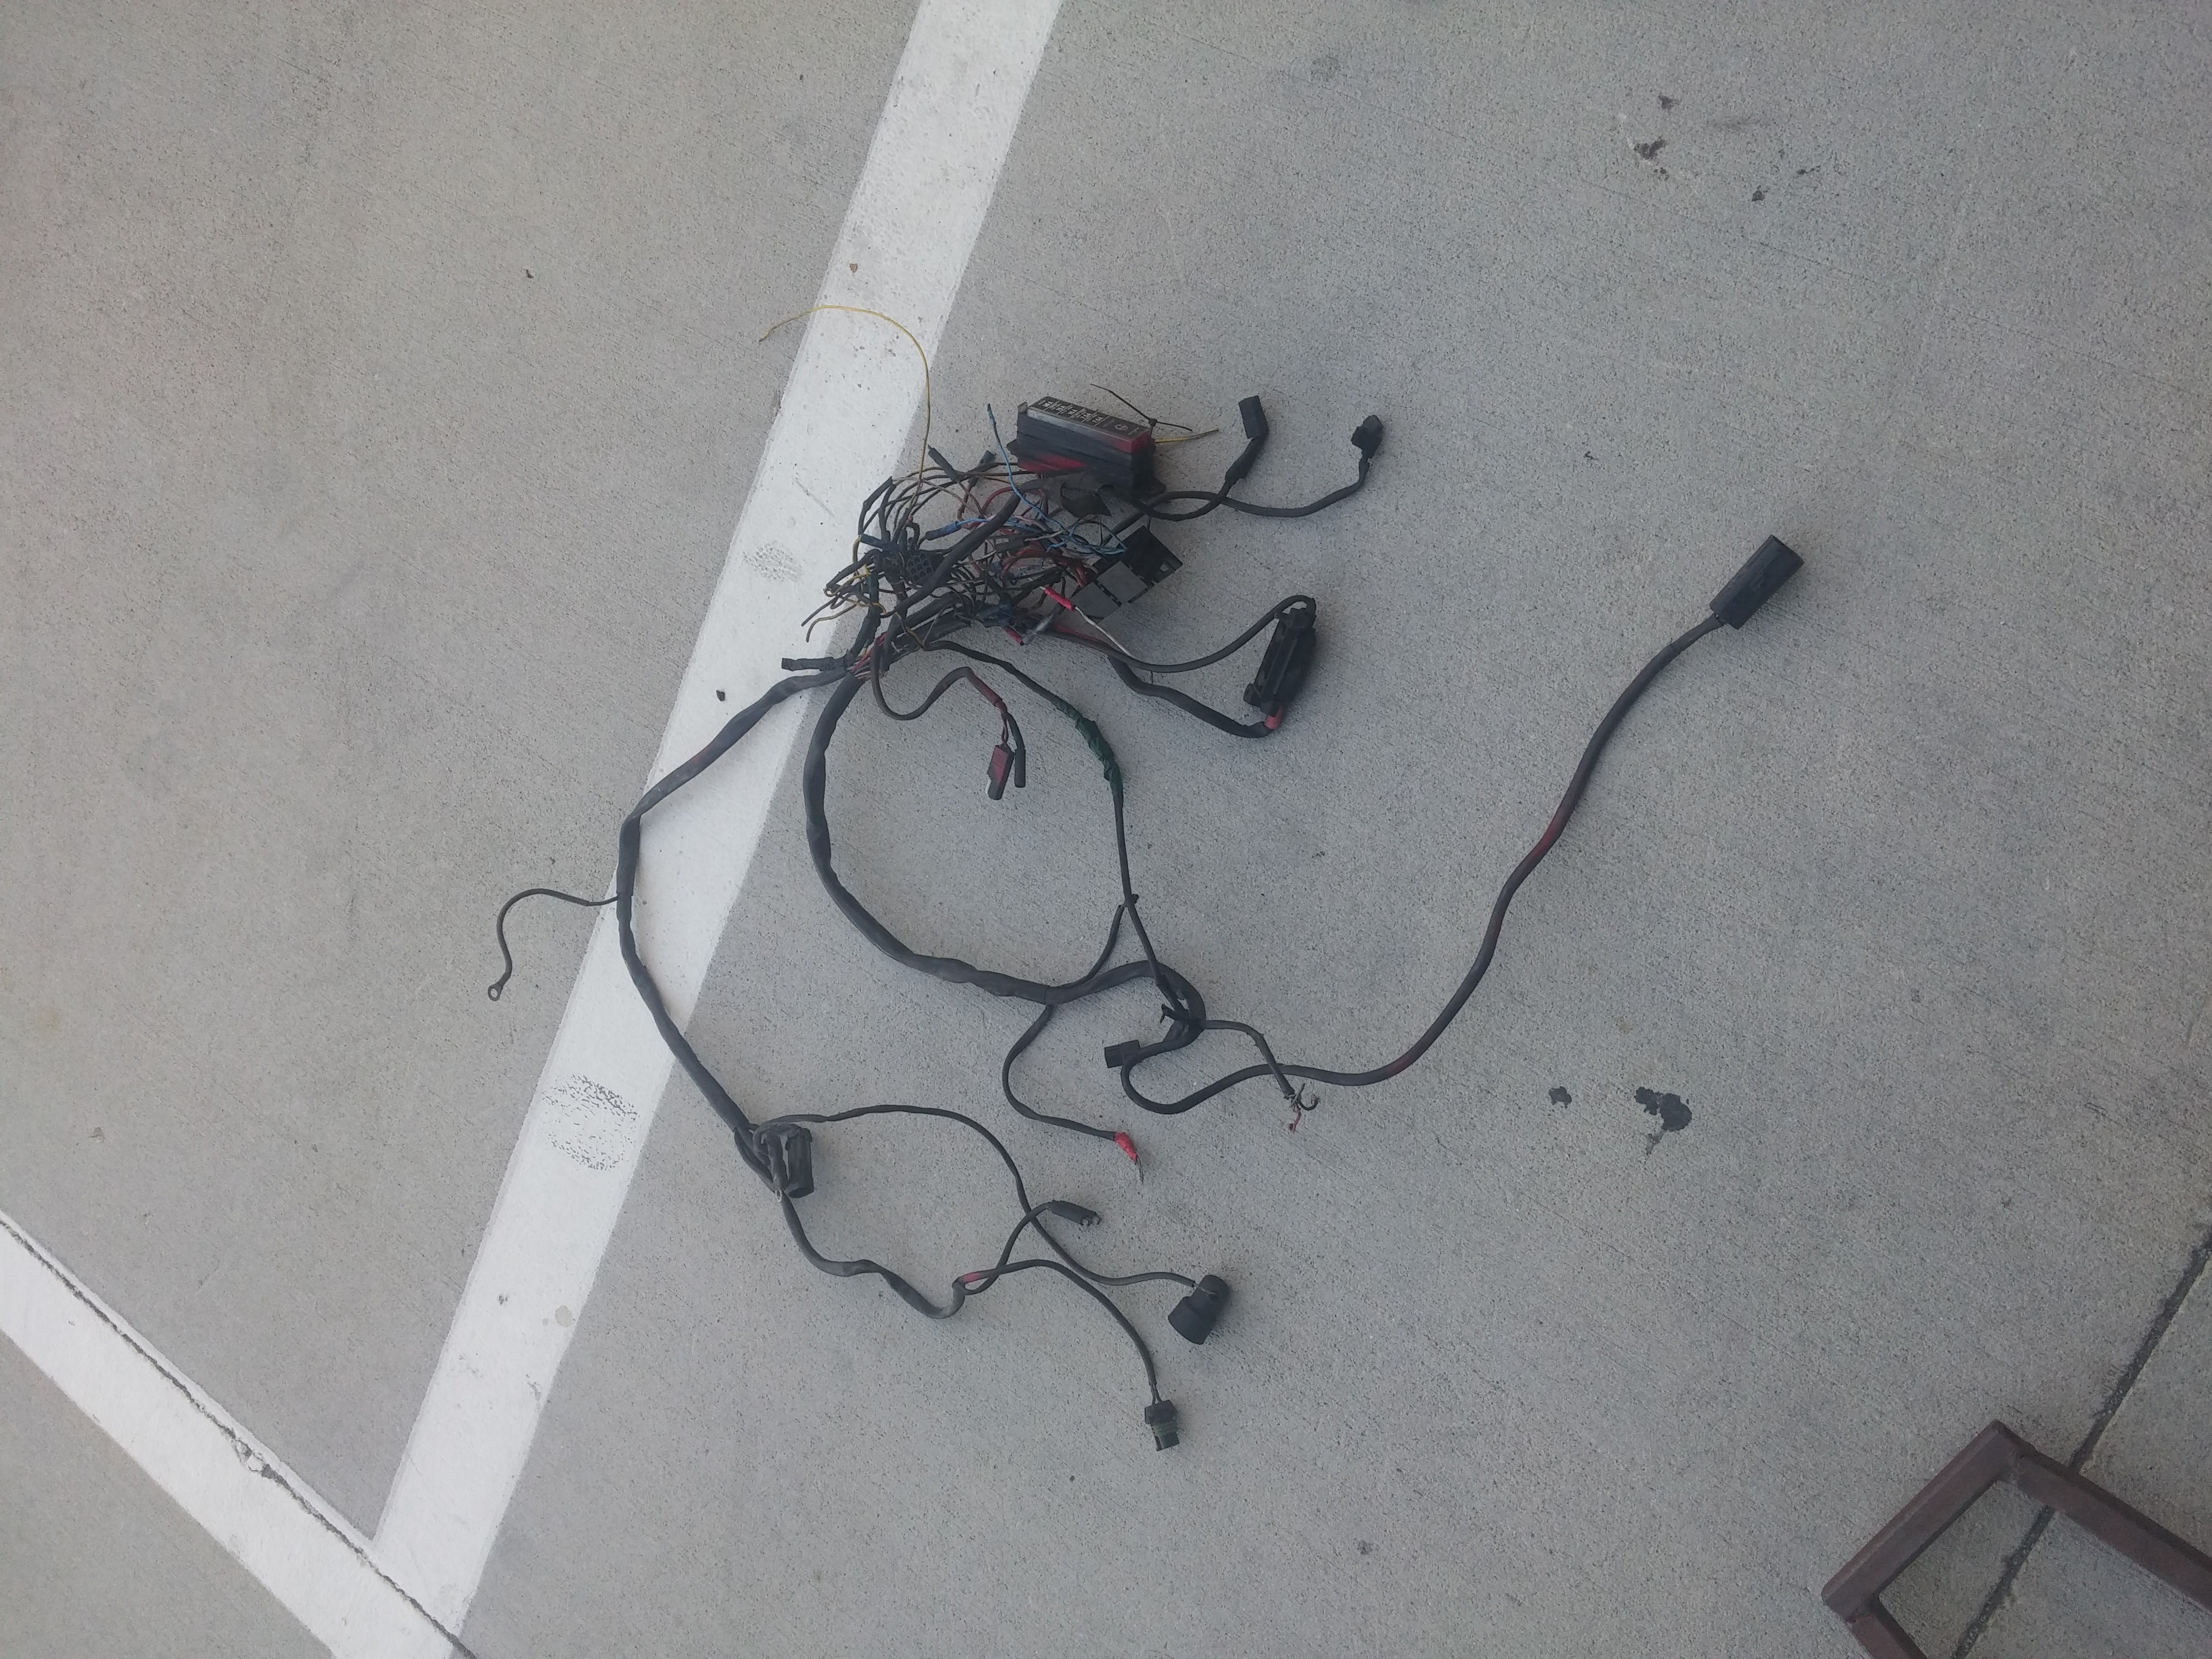 Motorcycle wiring DIY. | Hackaday.io